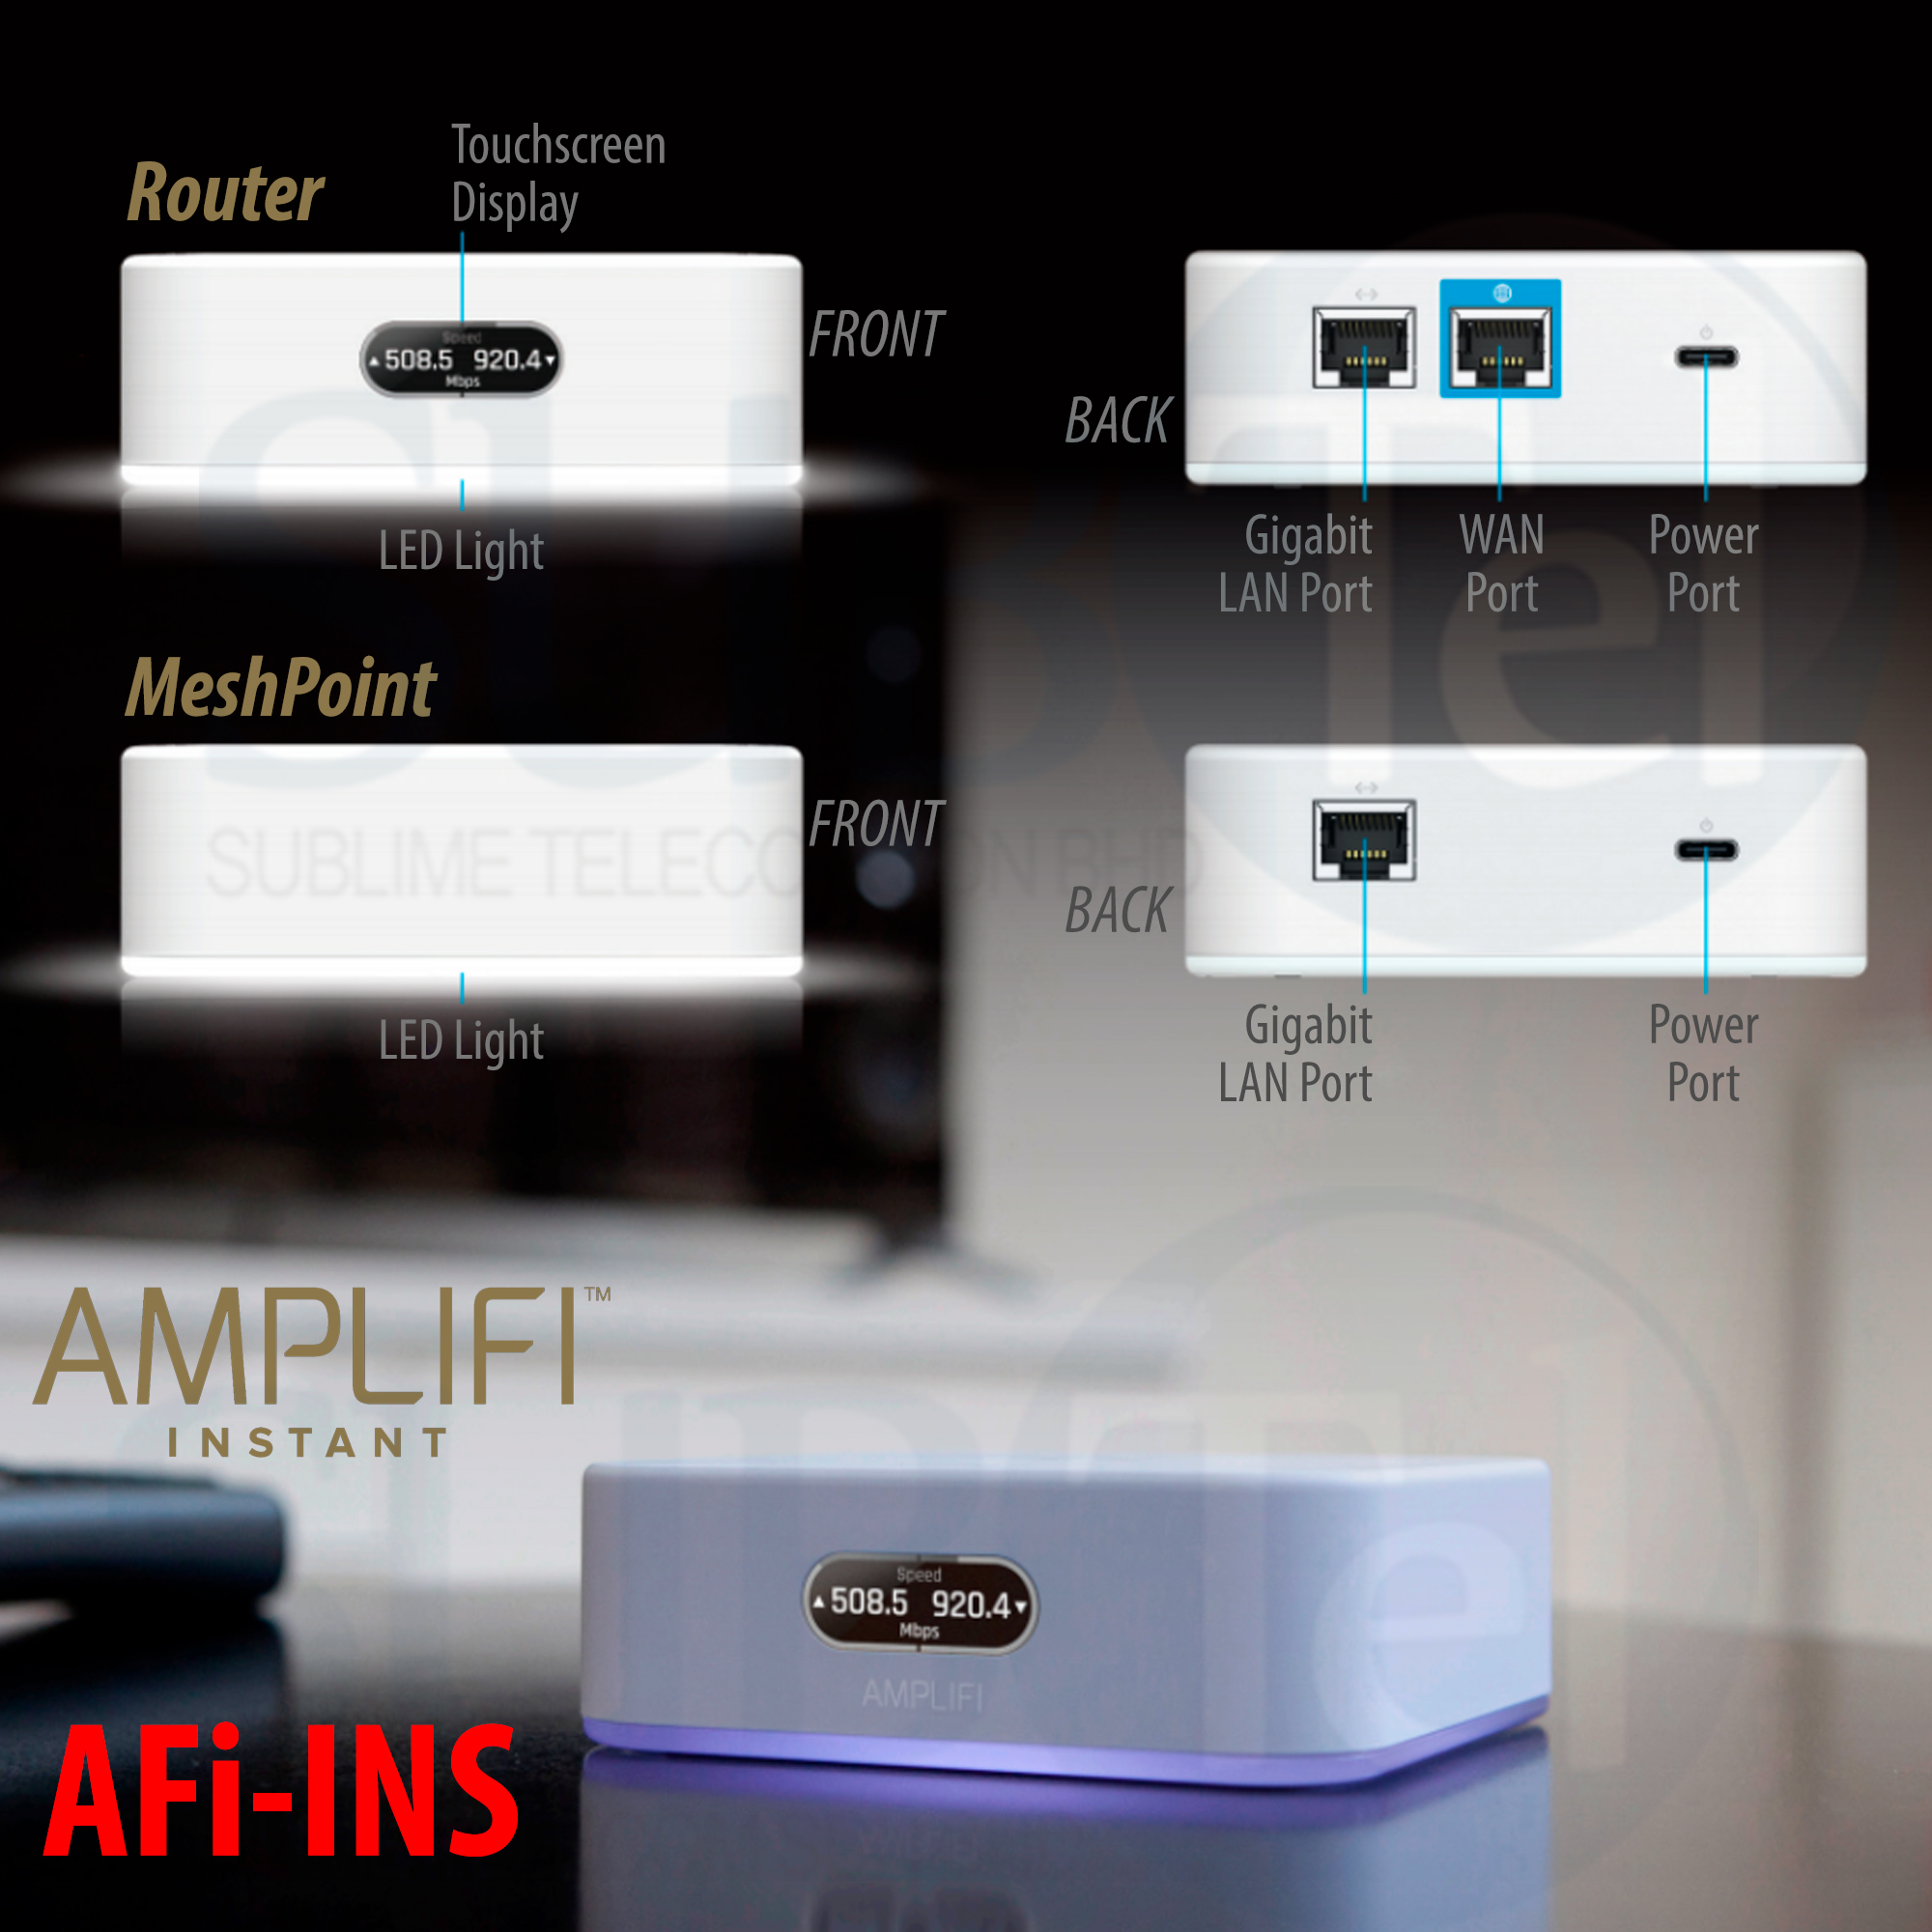 Ubiquiti AFi-INS Amplifi Instant Wifi Mesh Router AP vs AFI-HD UAP USG